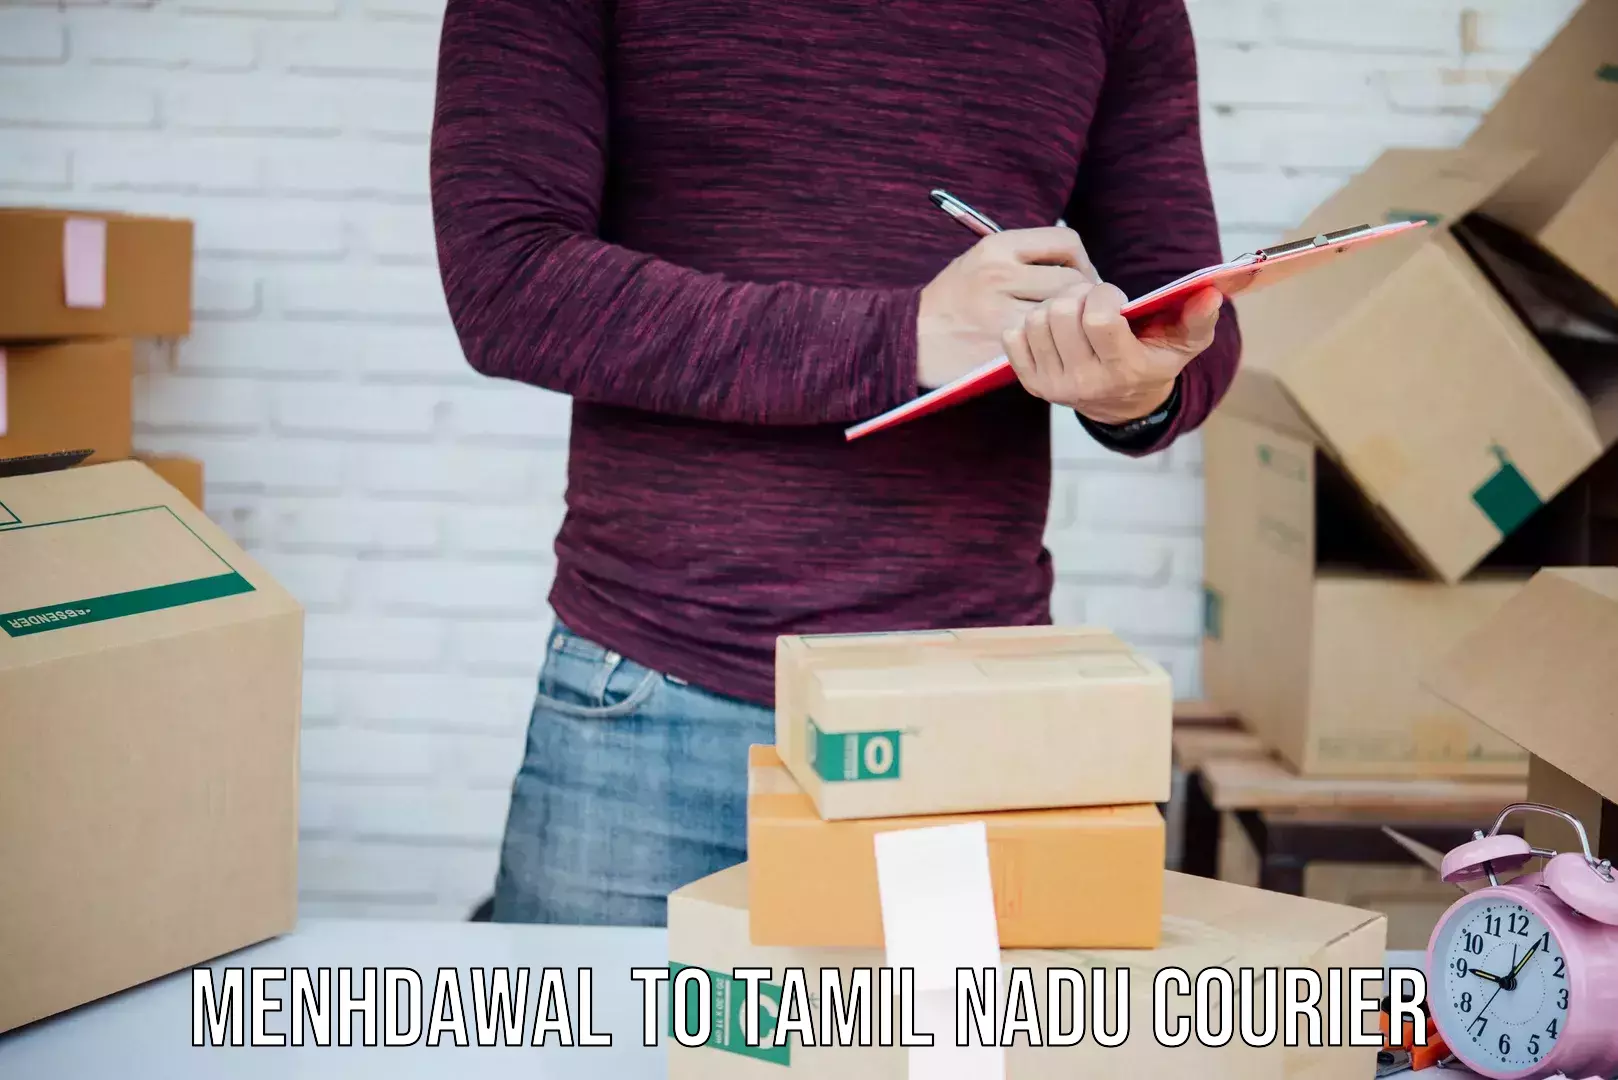 Automated parcel services Menhdawal to Maharajapuram